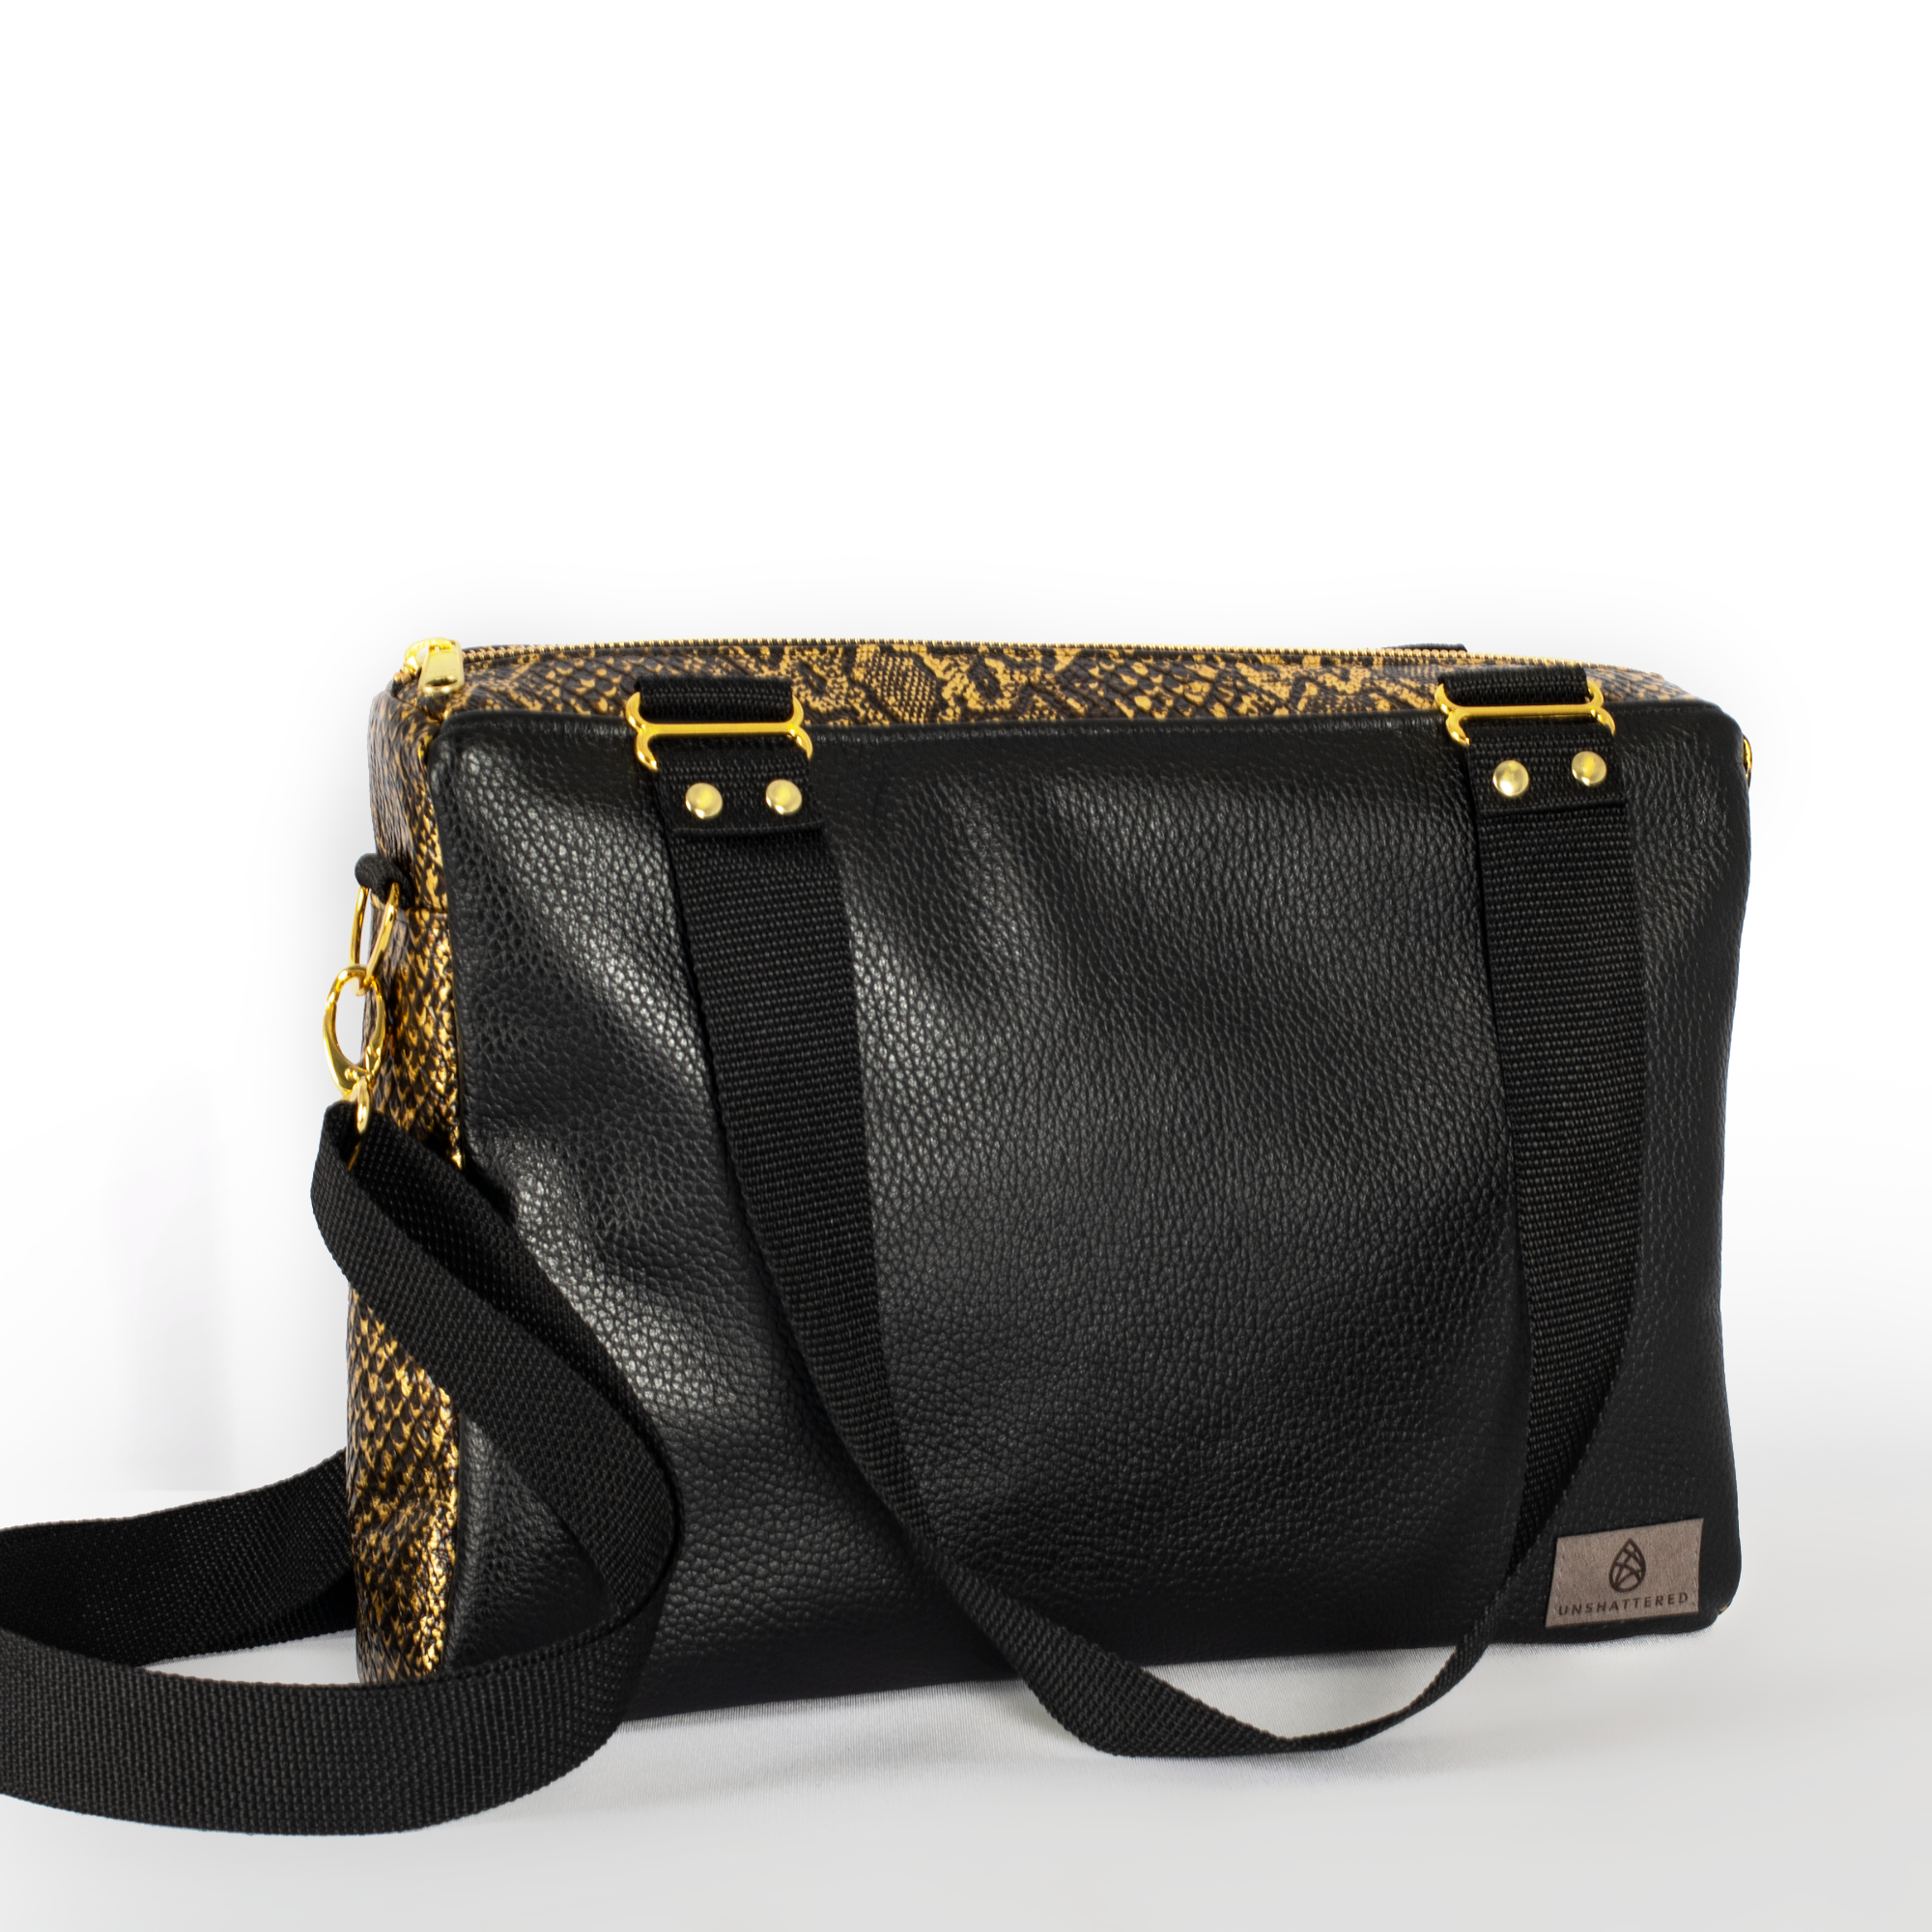 Wayne Leather Snakeskin Accent Convertible Handbag